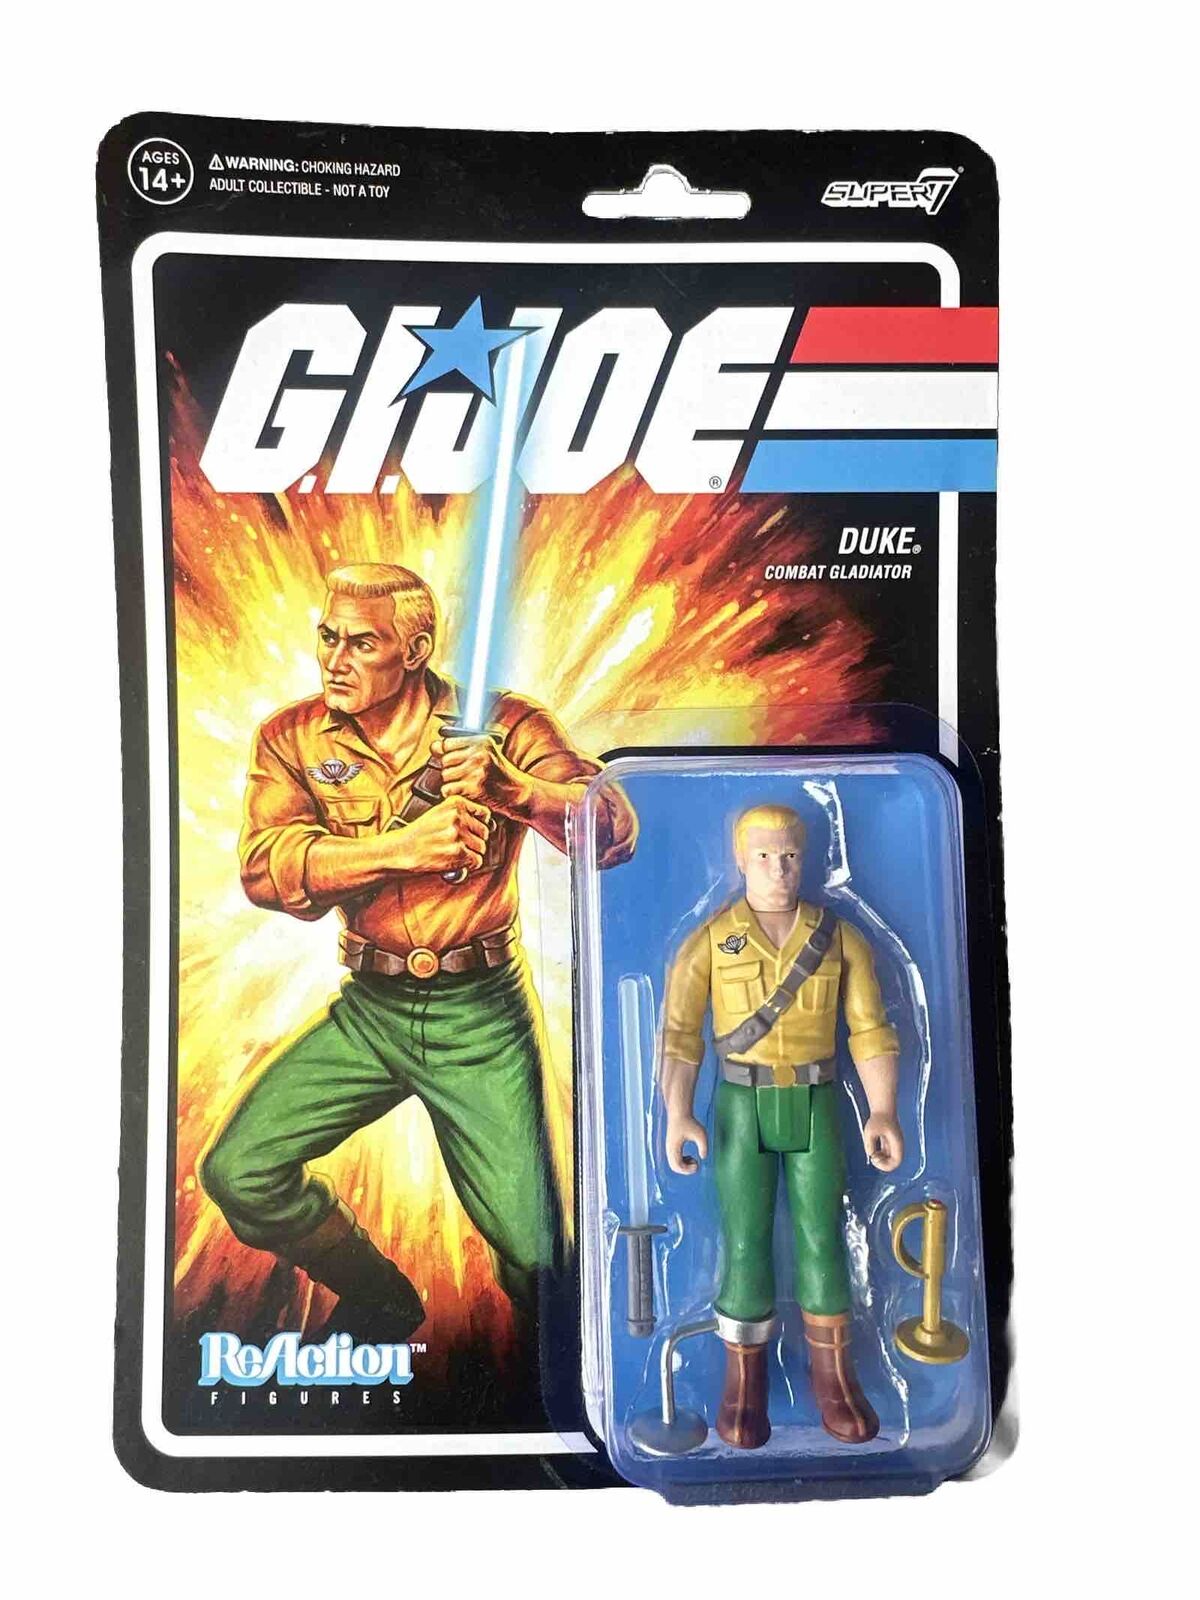 Duke Combat Gladiator G.I. Joe Super7 Reaction Action Figure New In Box